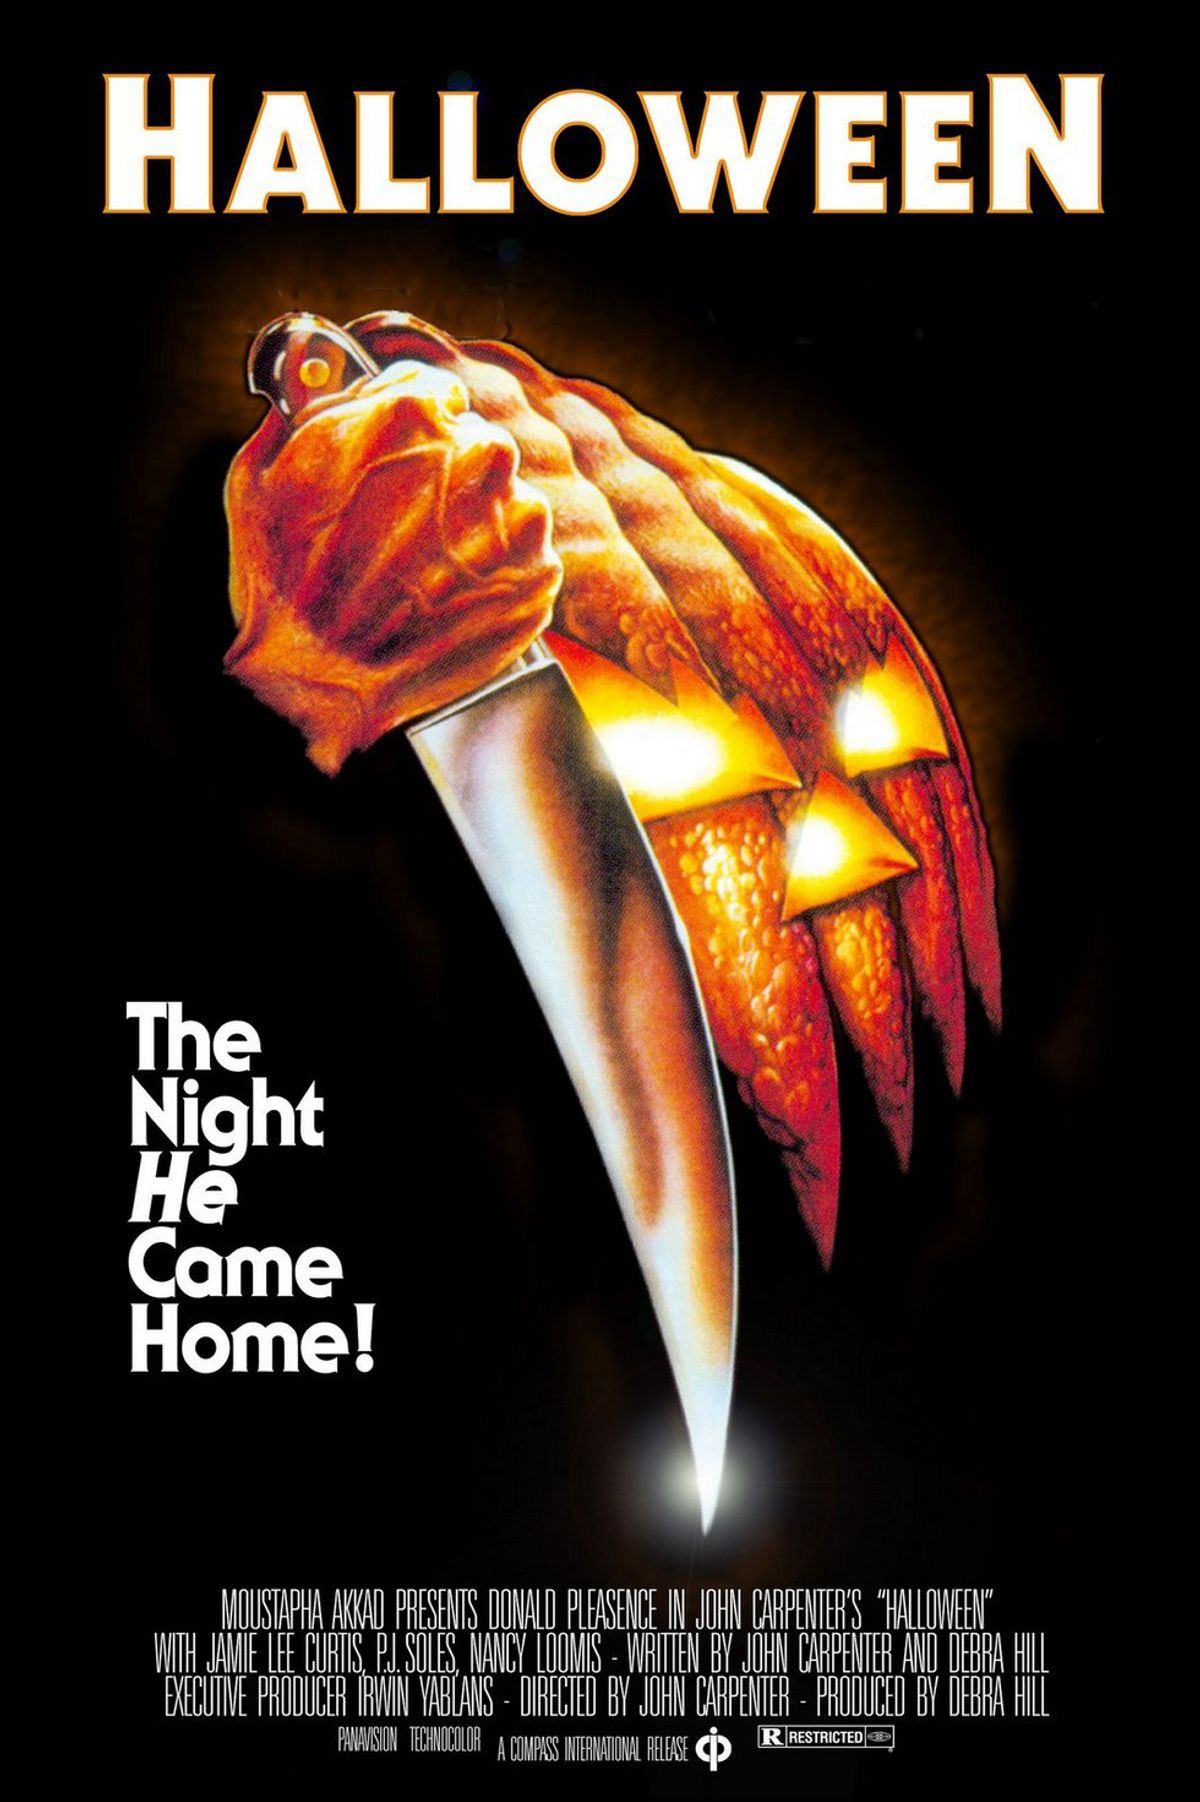 John Carpenter's Halloween: The Quintessential Horror Film